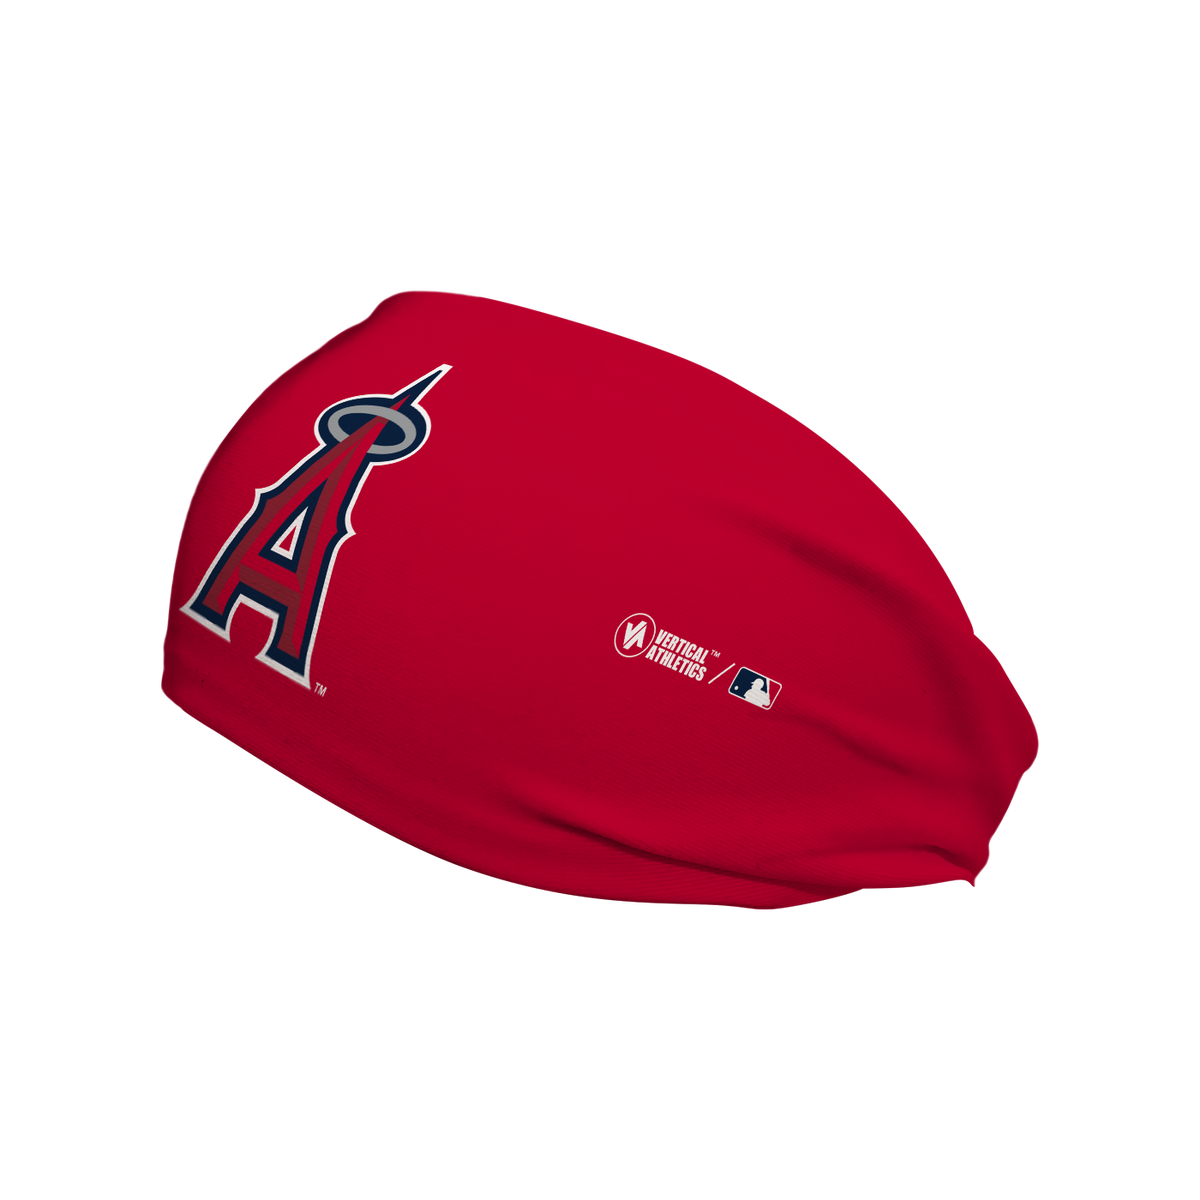 Angels Cooling Headband: City Connect Alt Logo – Vertical Athletics